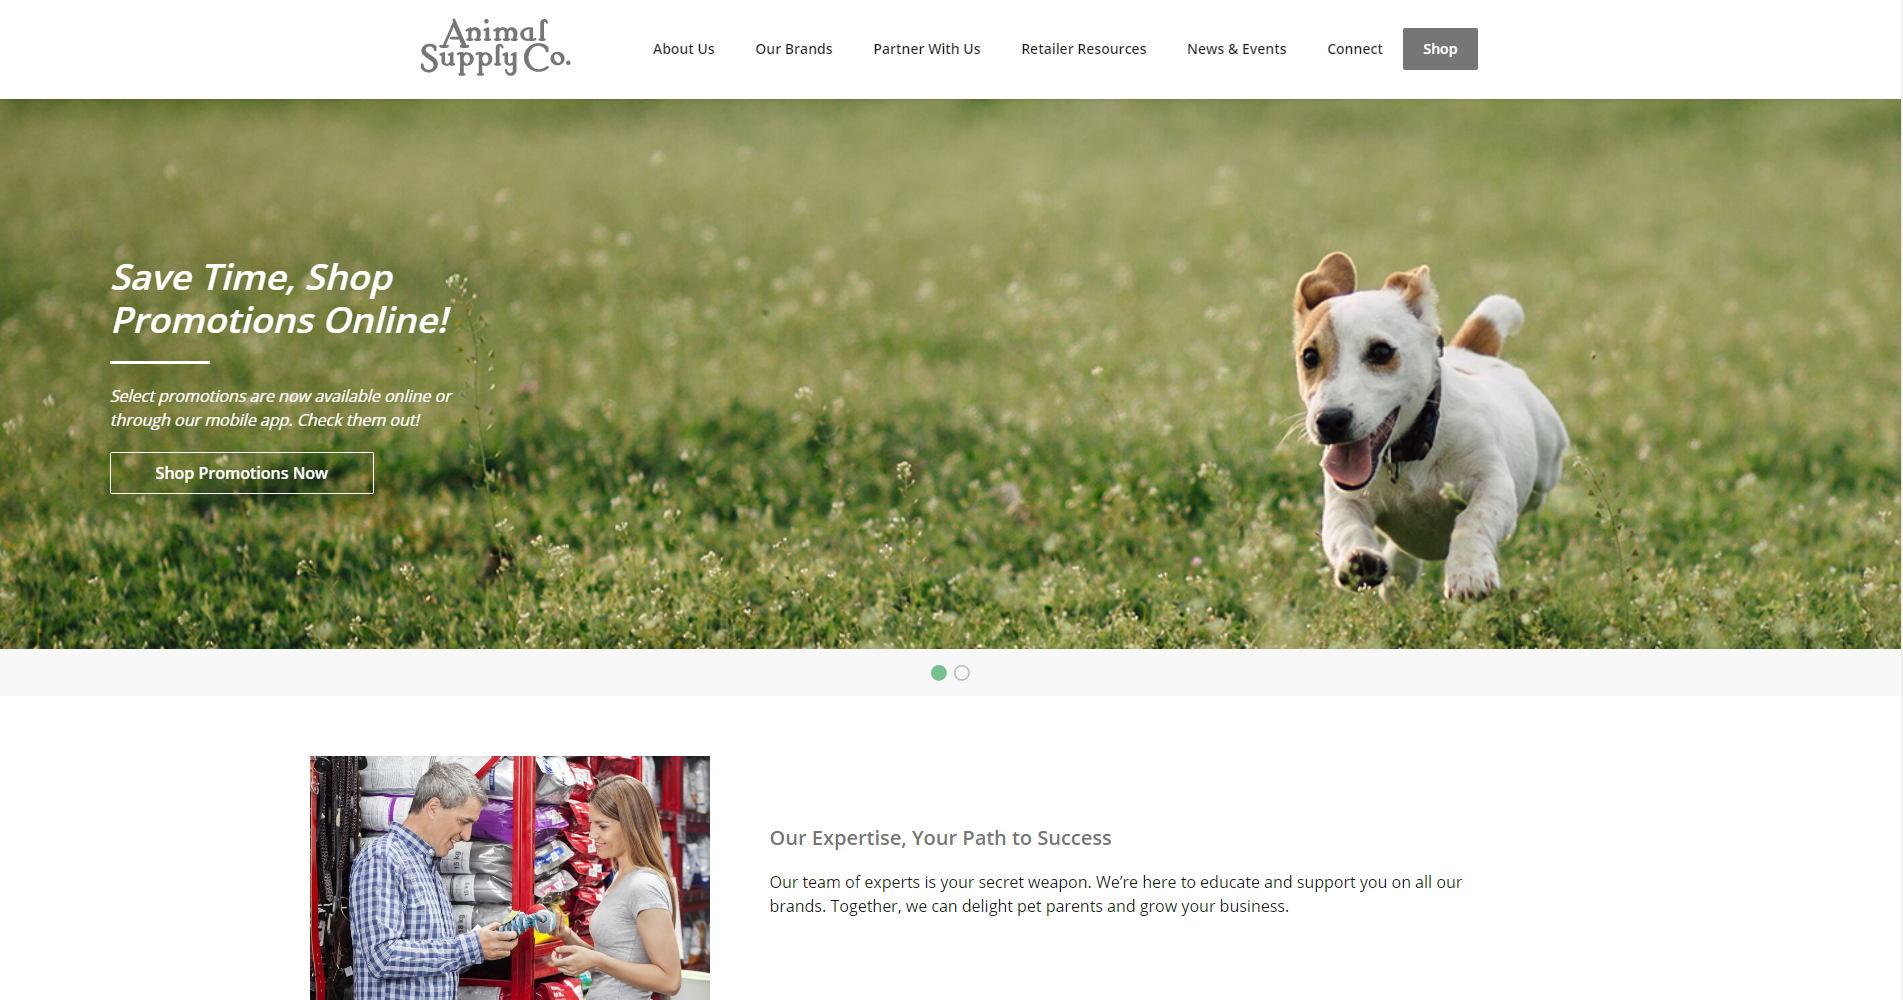 Animal Supply Company Website Screenshot